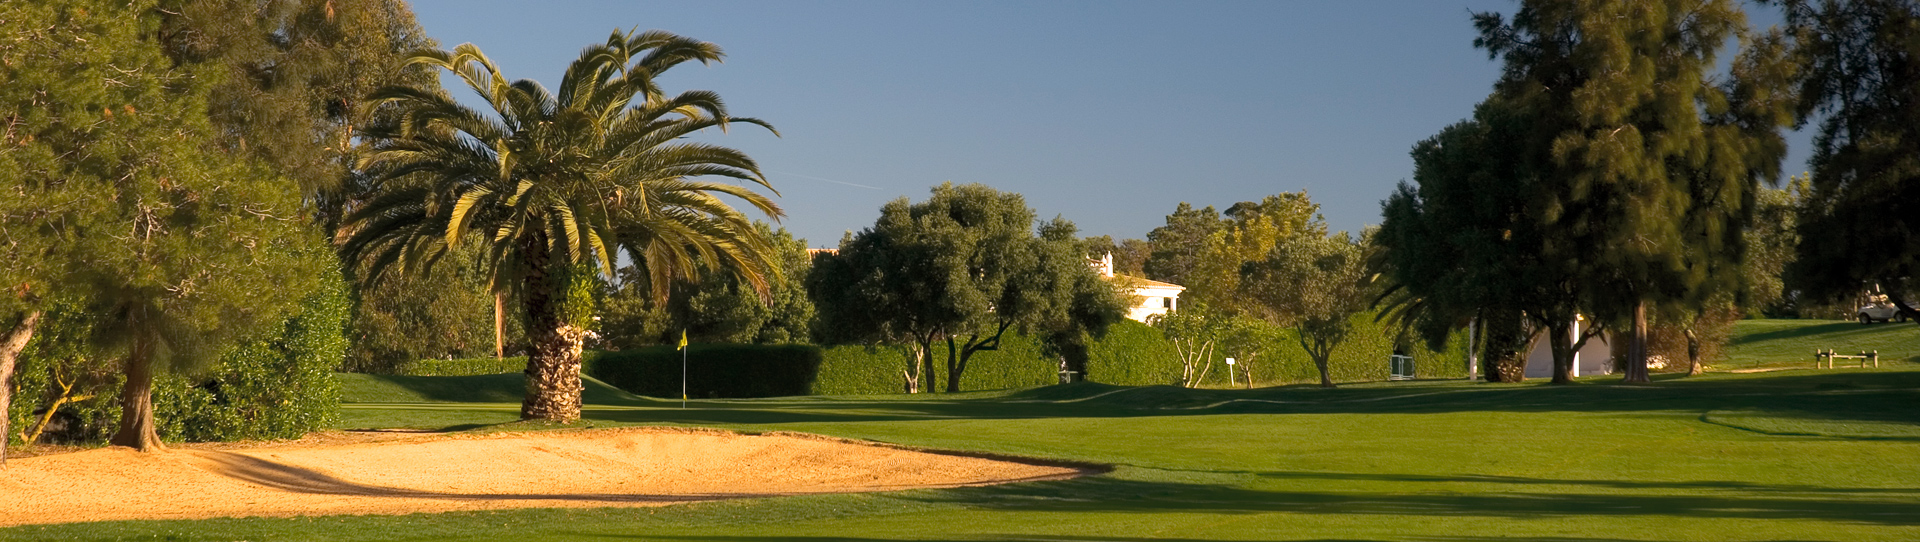 Portugal golf holidays - Pestana Golf | Buggy Included - Photo 1